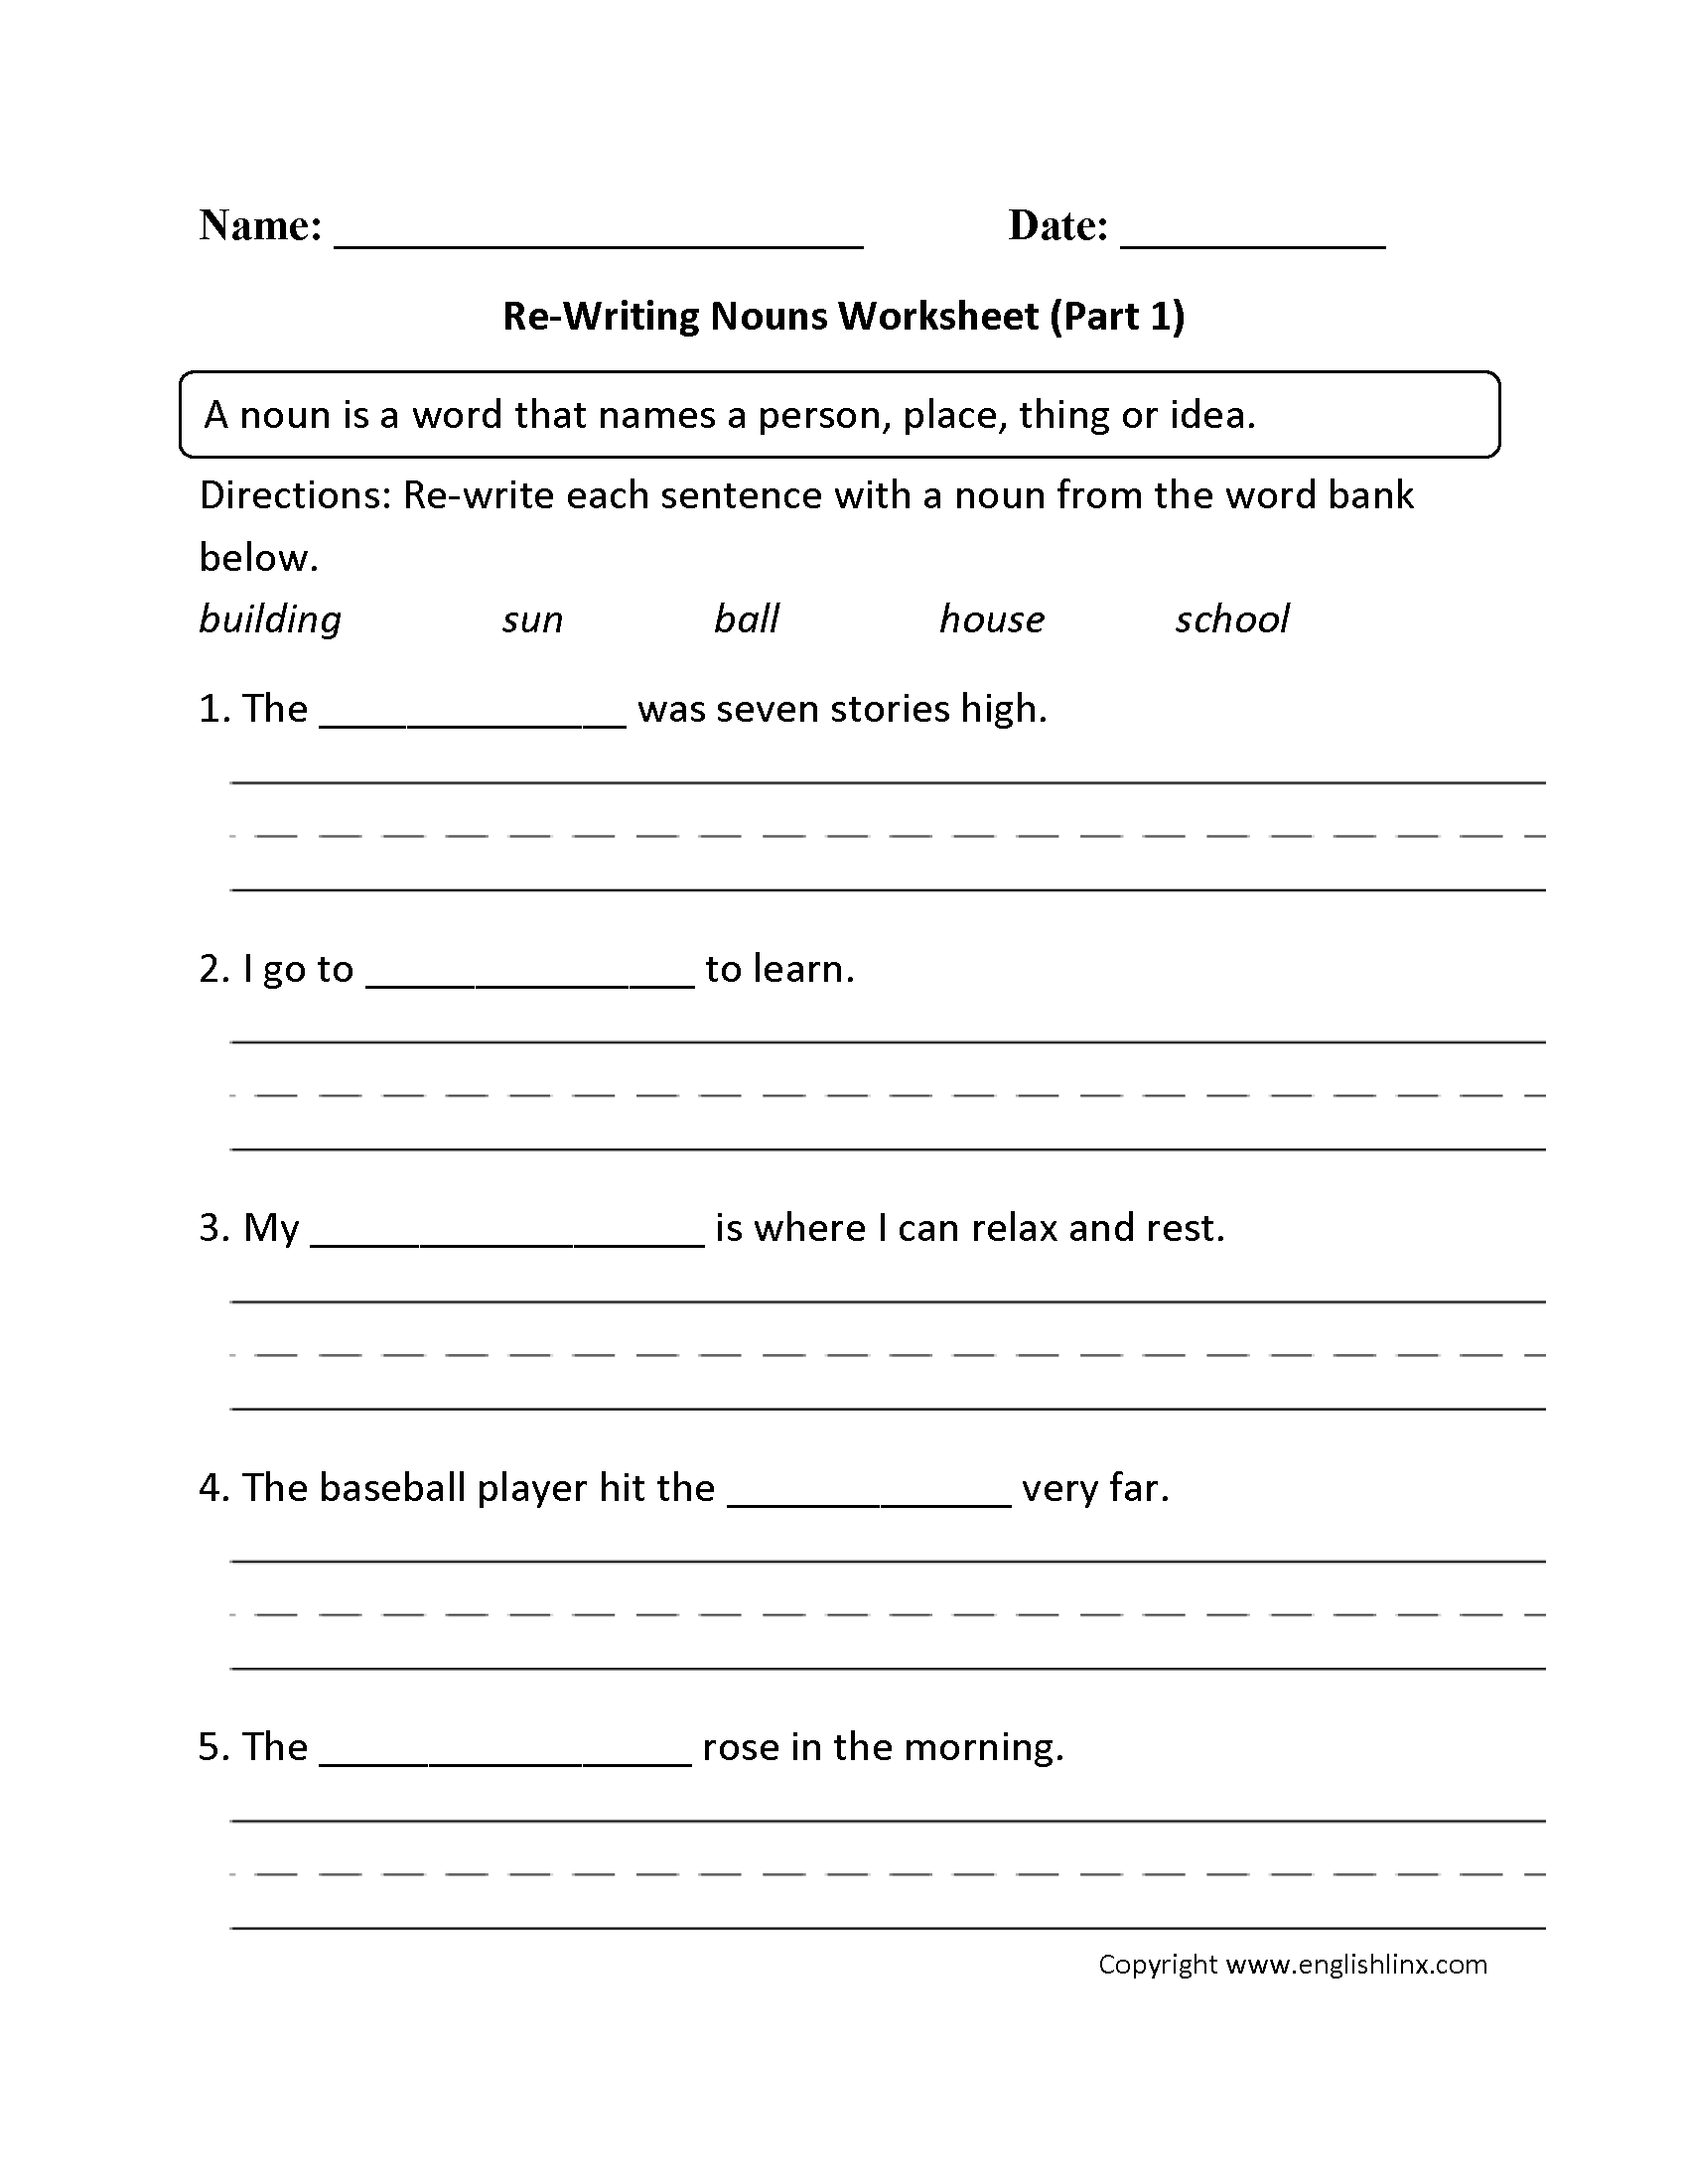 Nouns Worksheet Circling Part 1 Answers